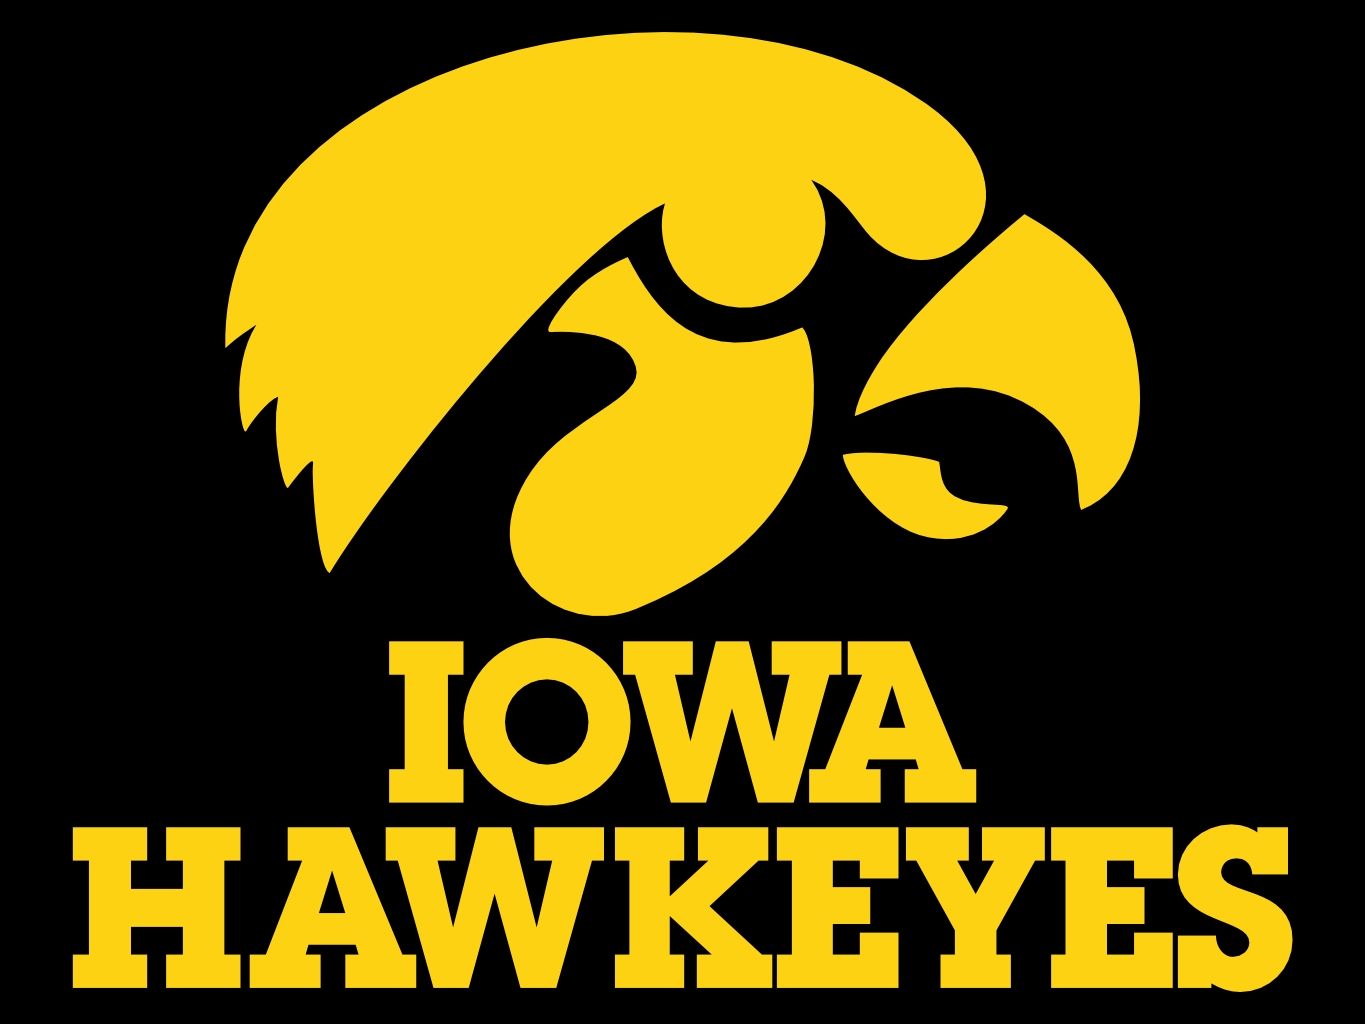 The University of Iowa Wallpaper. Iowa Farm Wallpaper, Iowa Hawkeyes Football Wallpaper and Iowa College Wallpaper